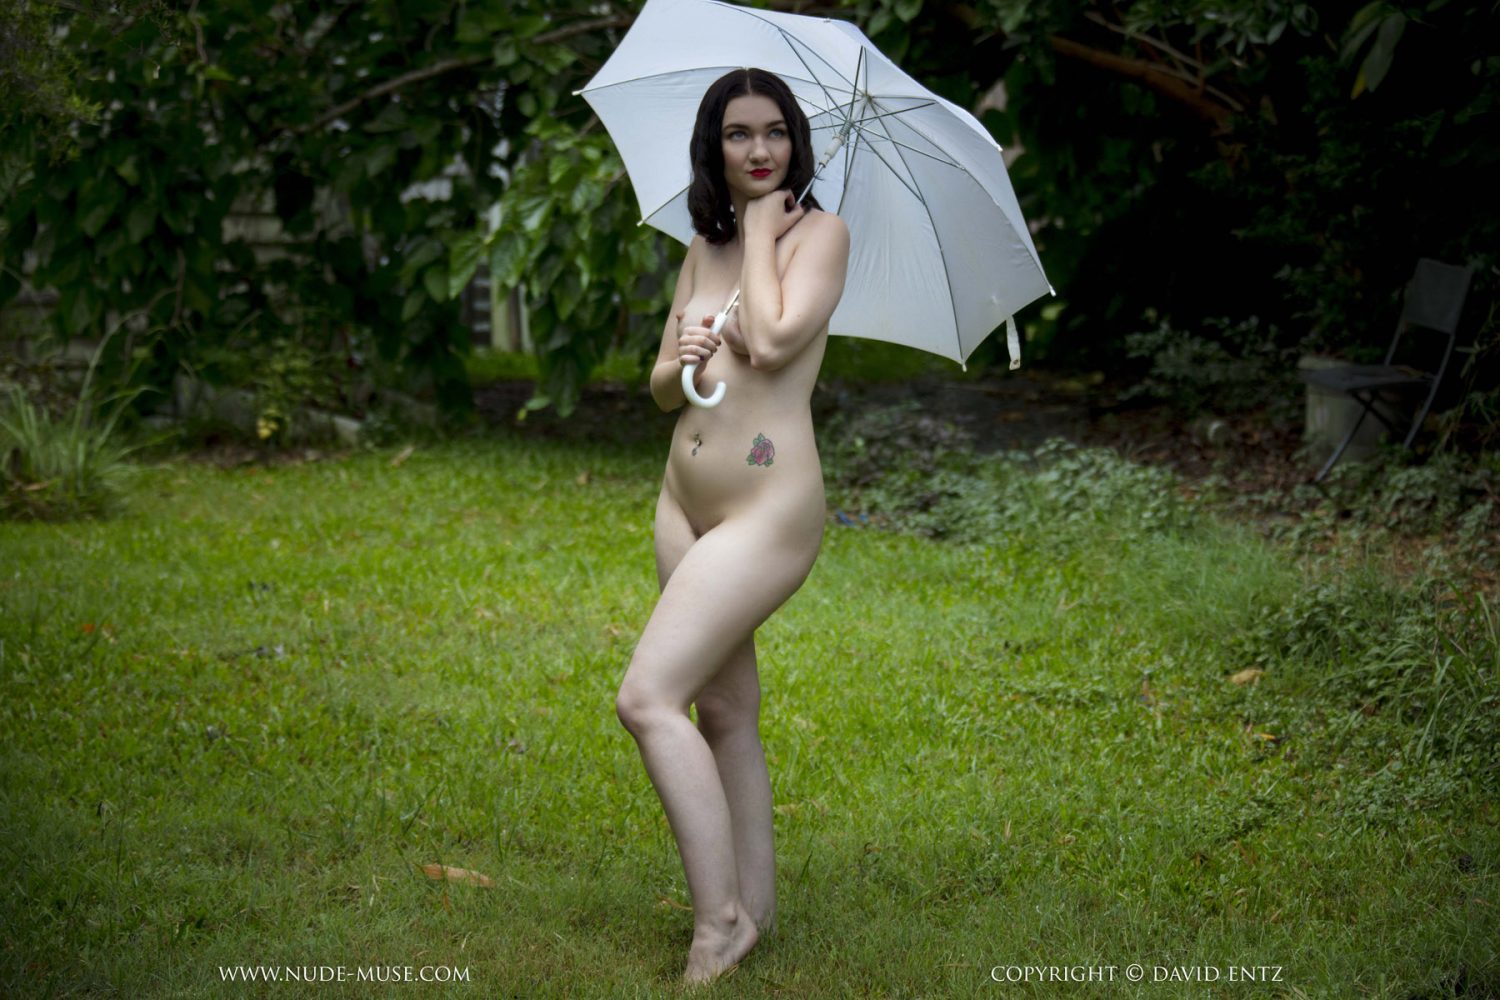 Nora Rose in Umbrella at Nude Muse